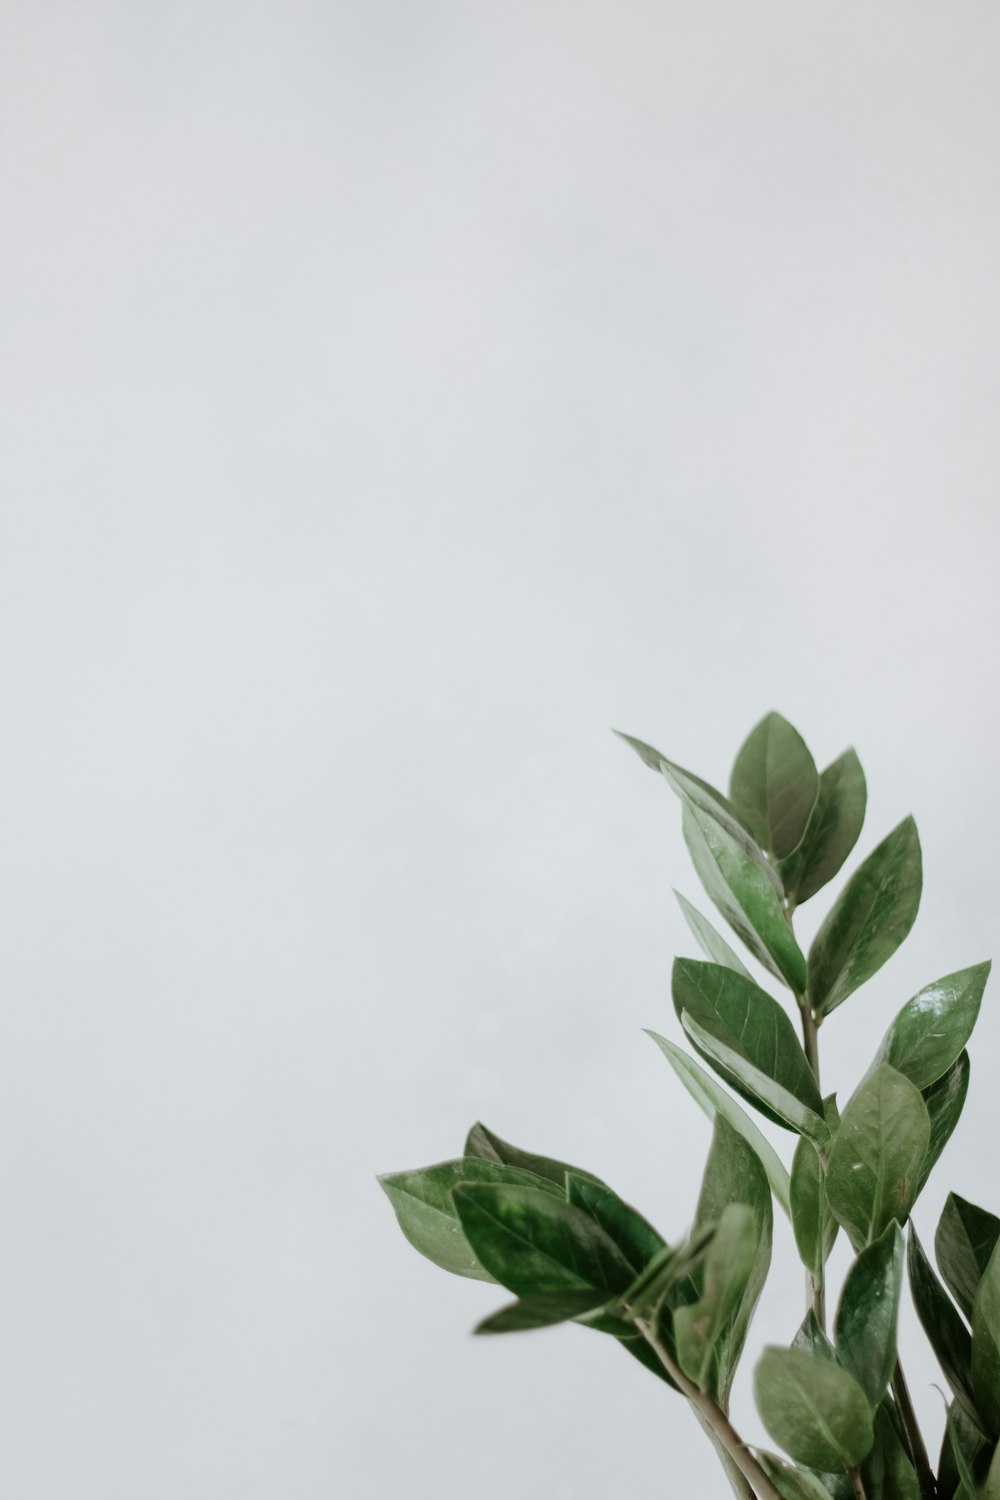 green leaves on white background photo – Free Plant Image on Unsplash